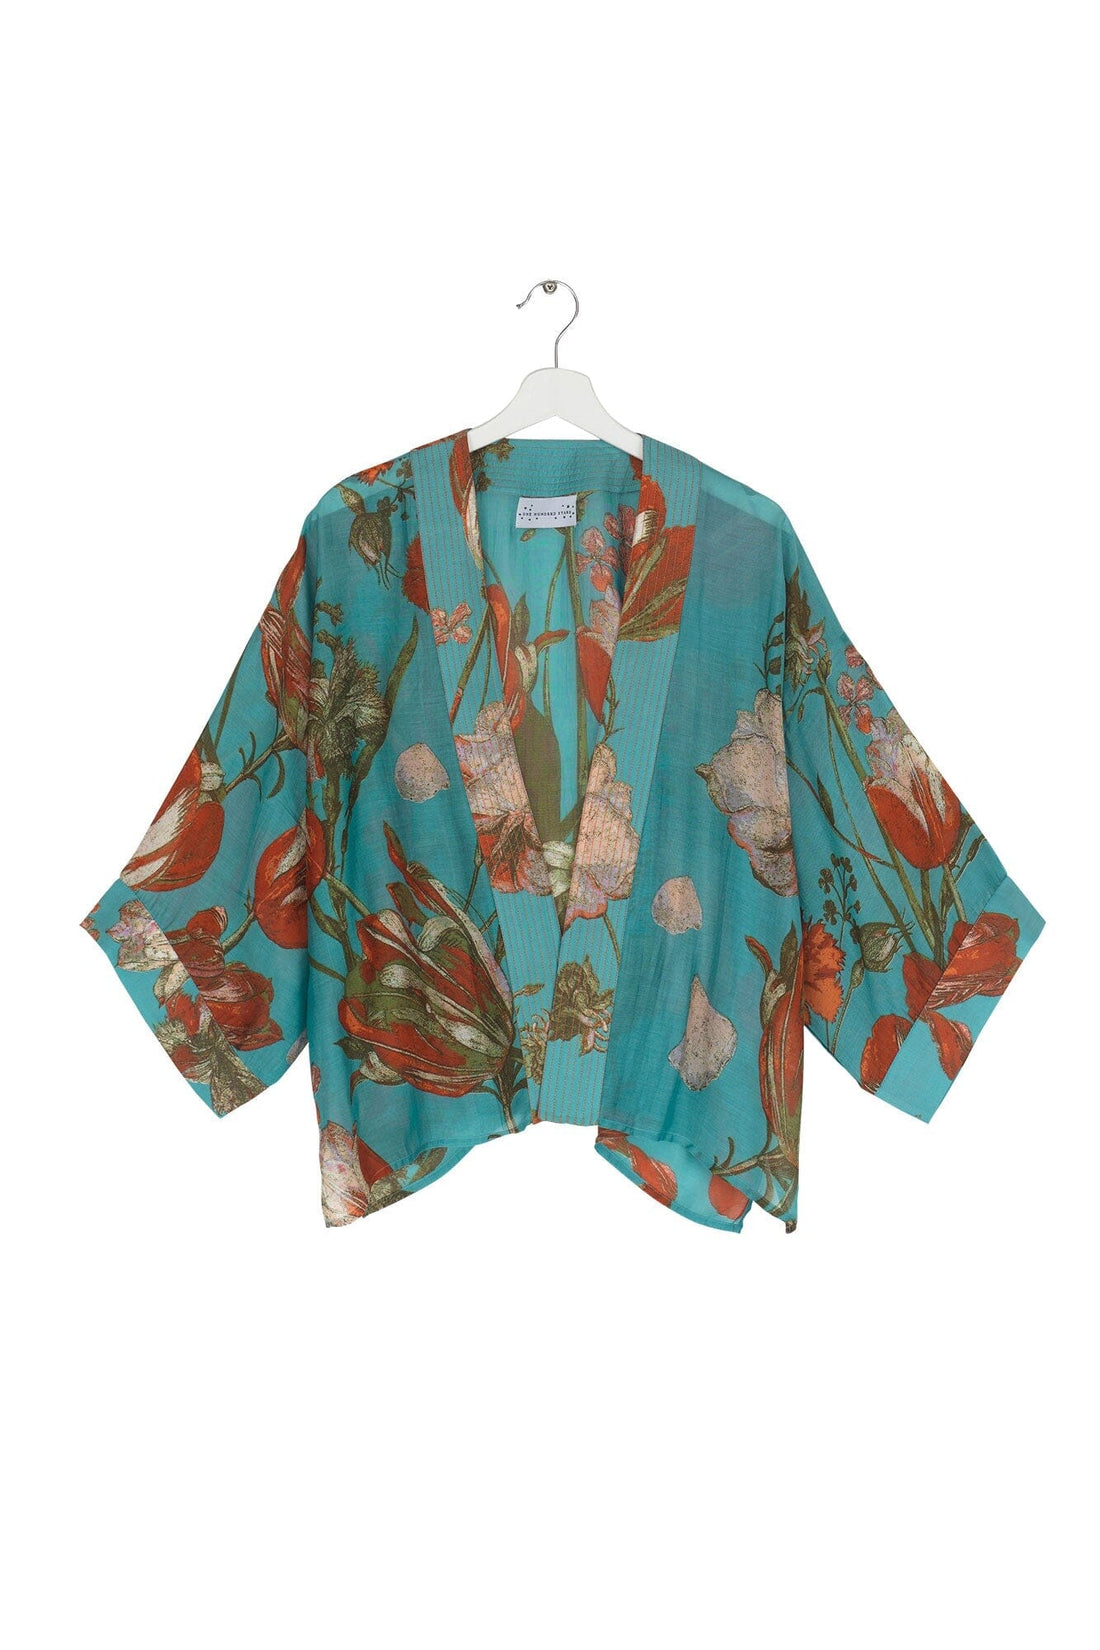 Short Lightweight Kimono in Tulip Blue Print - KIMTULBLU Kimonos One Hundred Stars